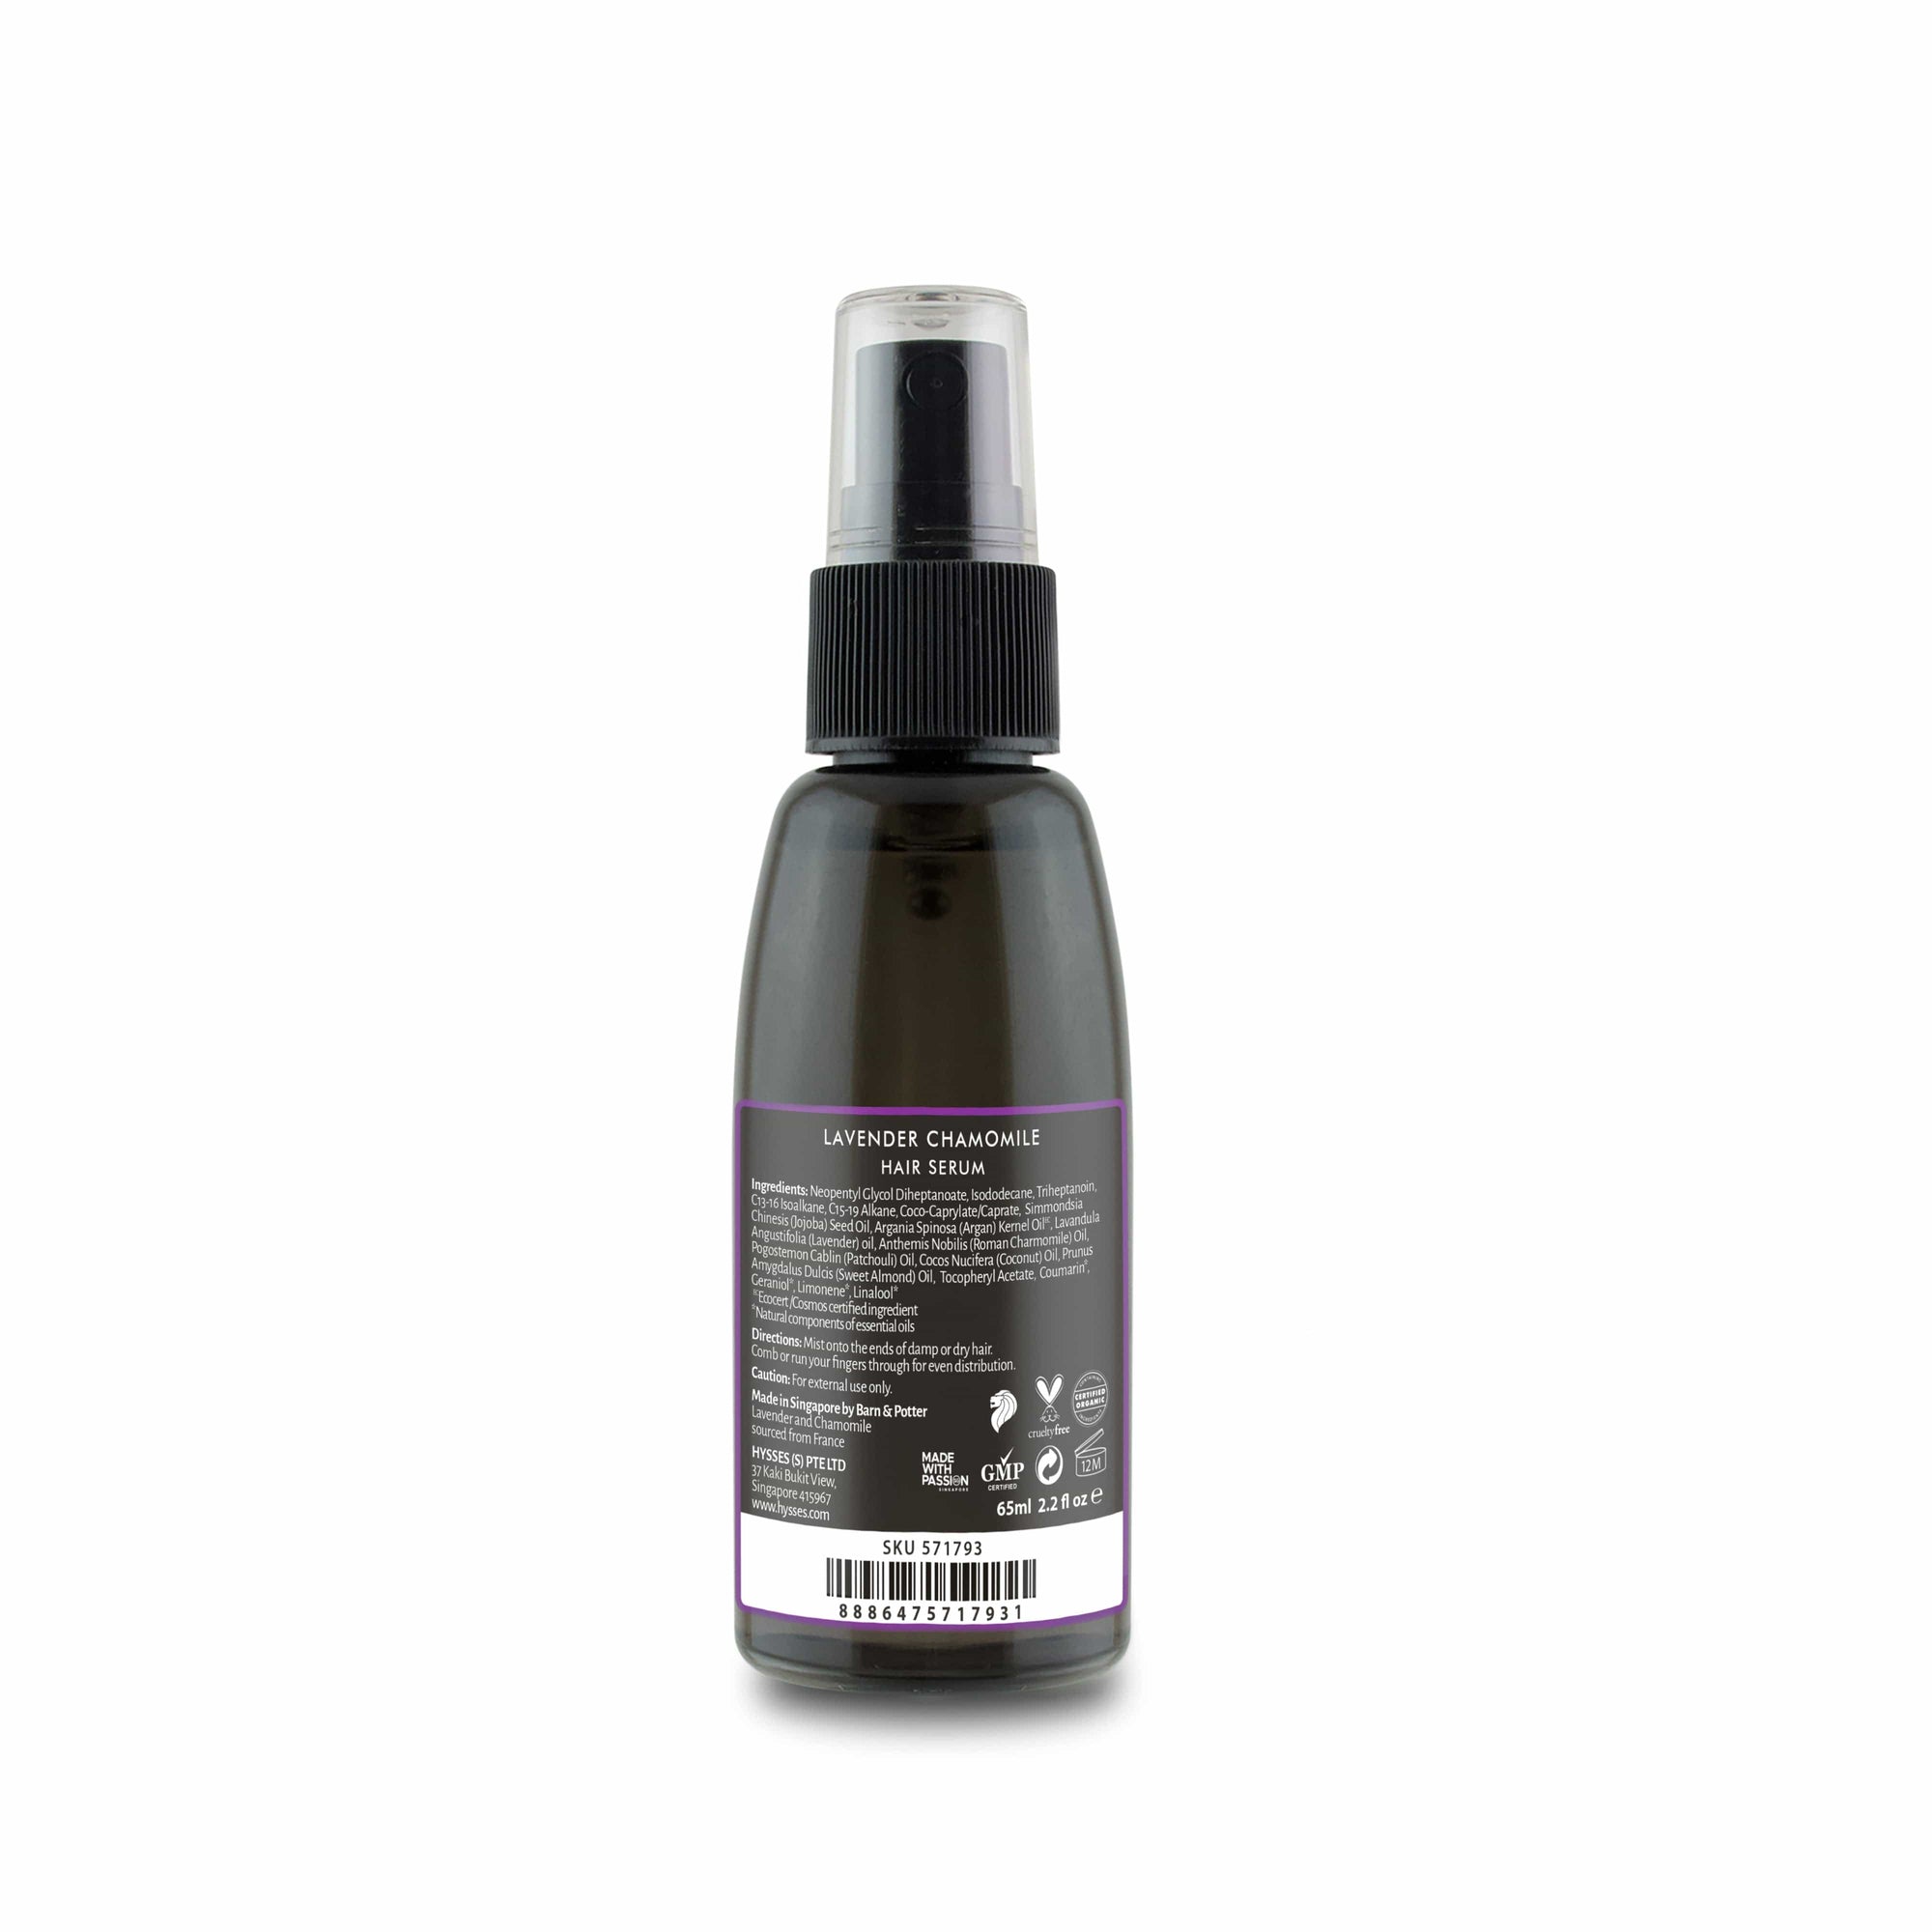 Hysses Hair Care Lightweight Hair Serum Lavender Chamomile, 65ML